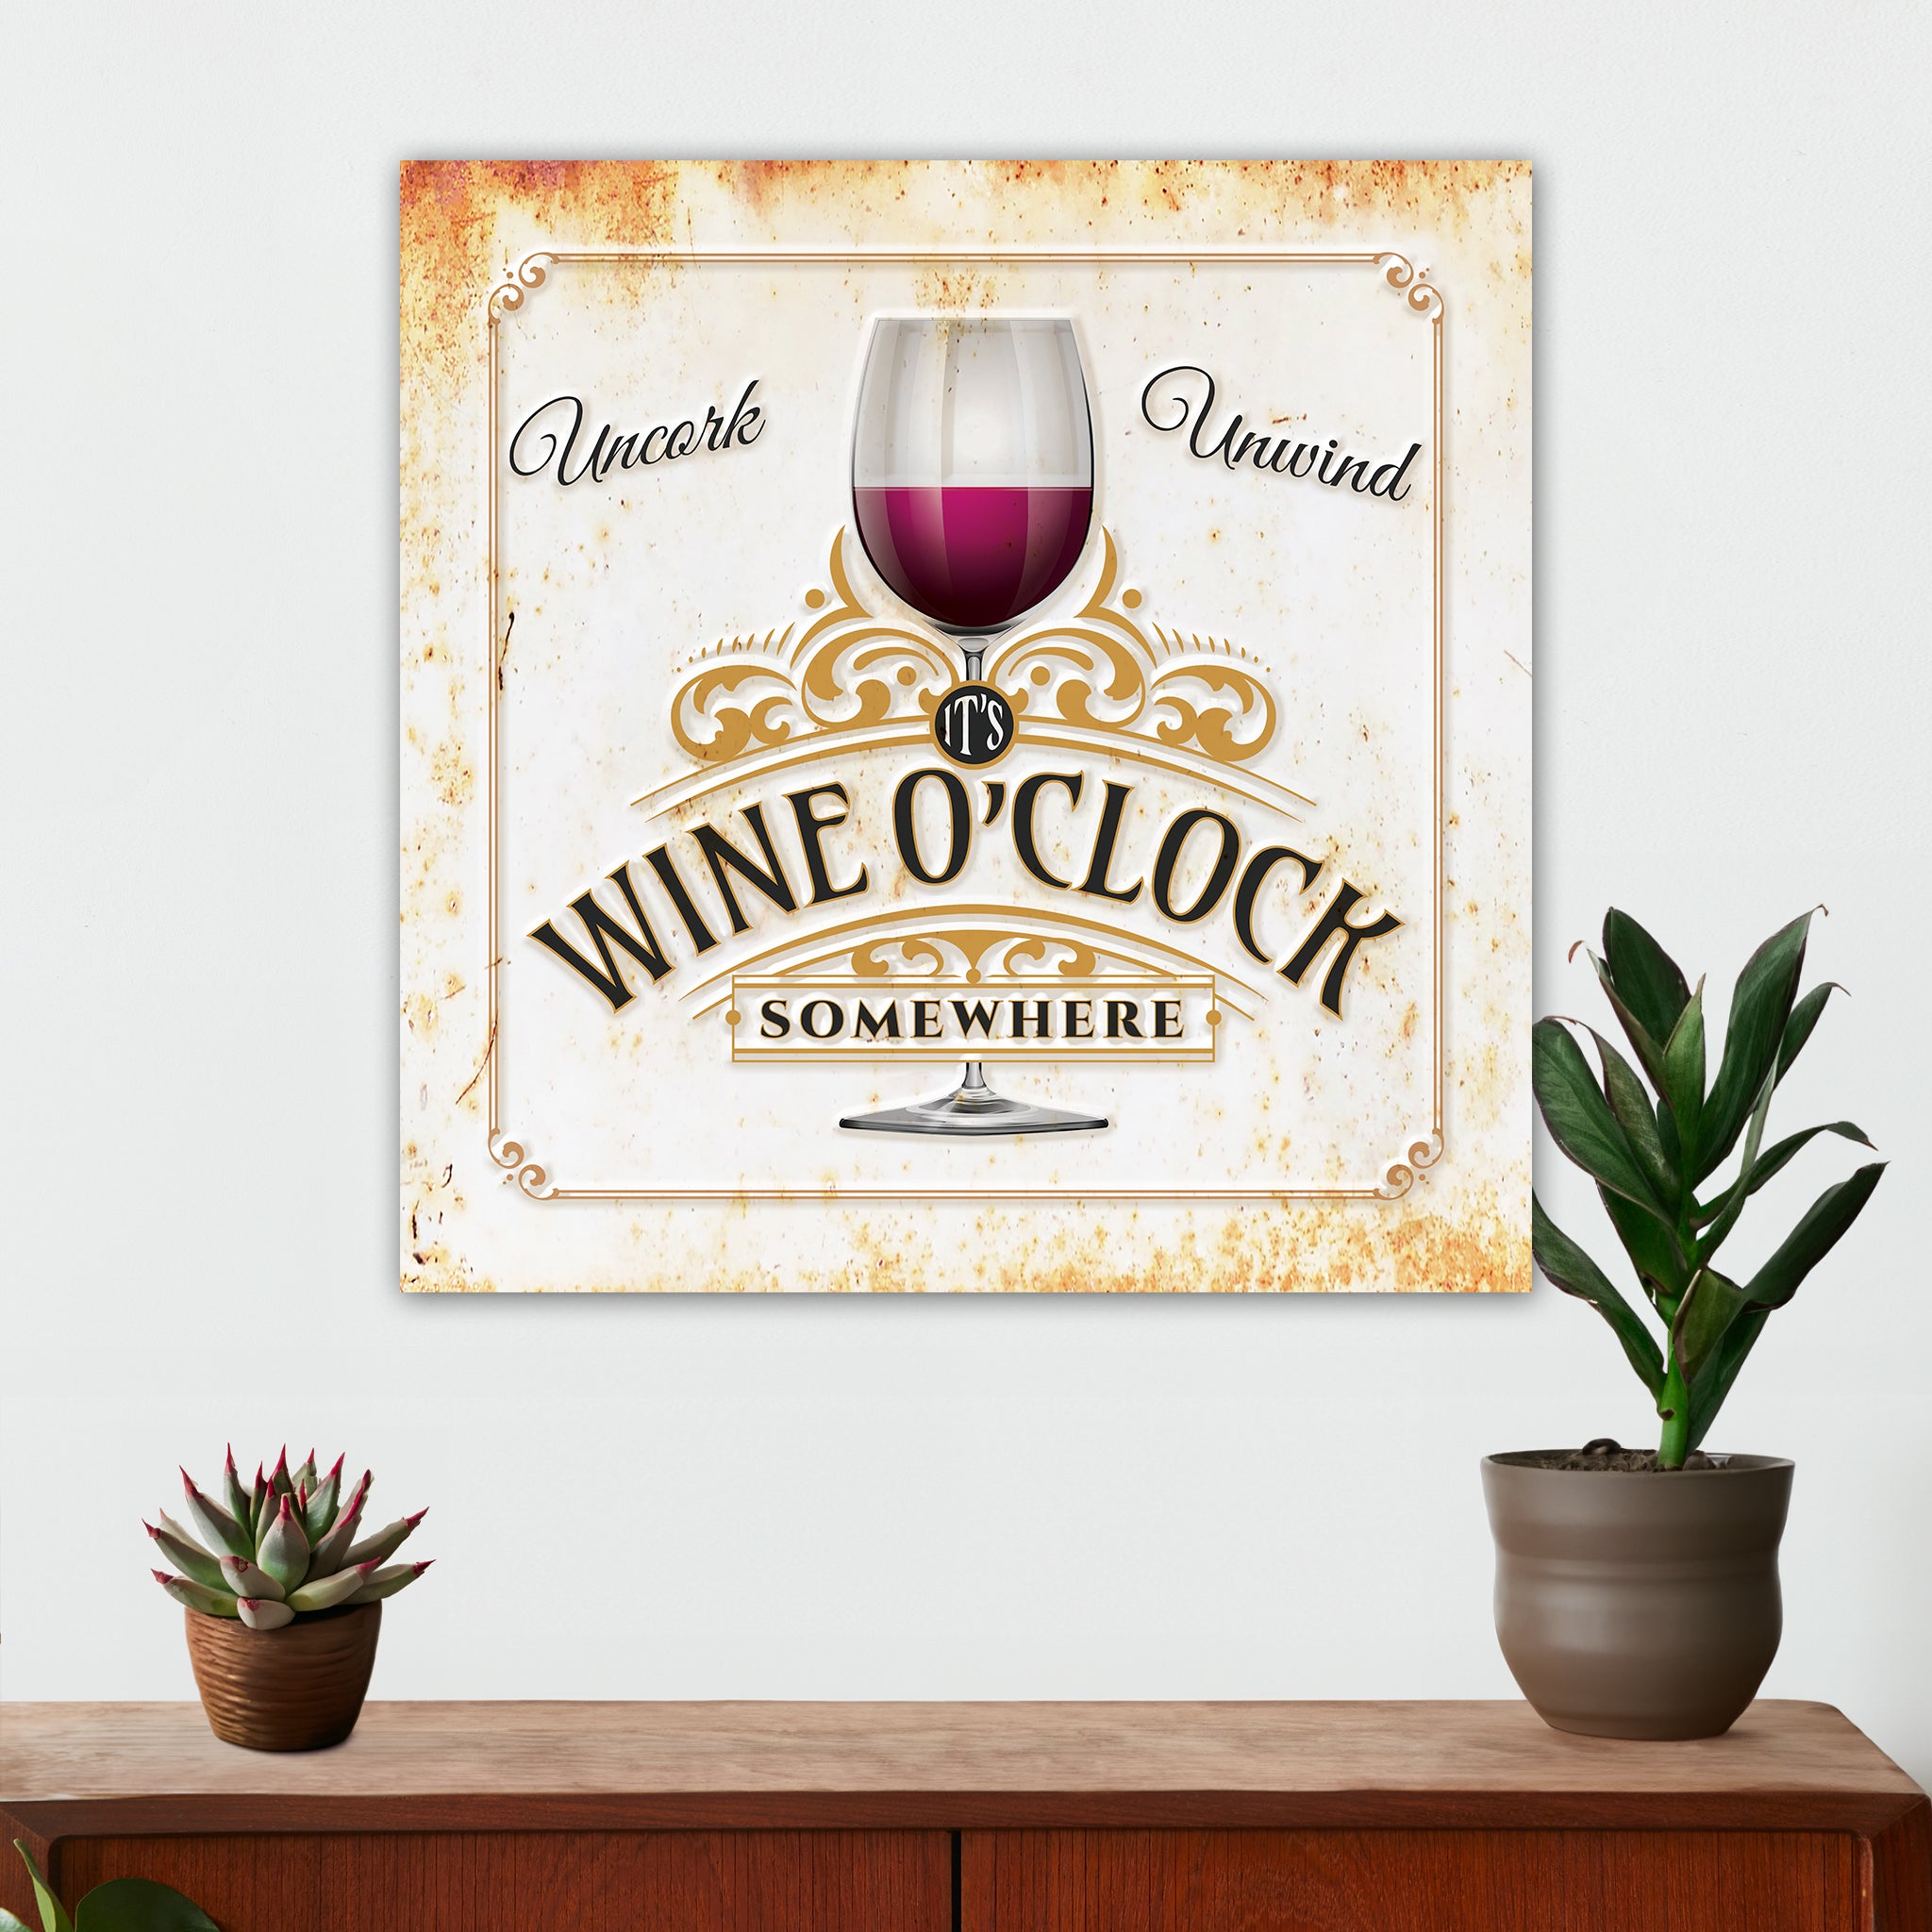 Wine Wall Decor - Wine O' Clock - Canvas Sign